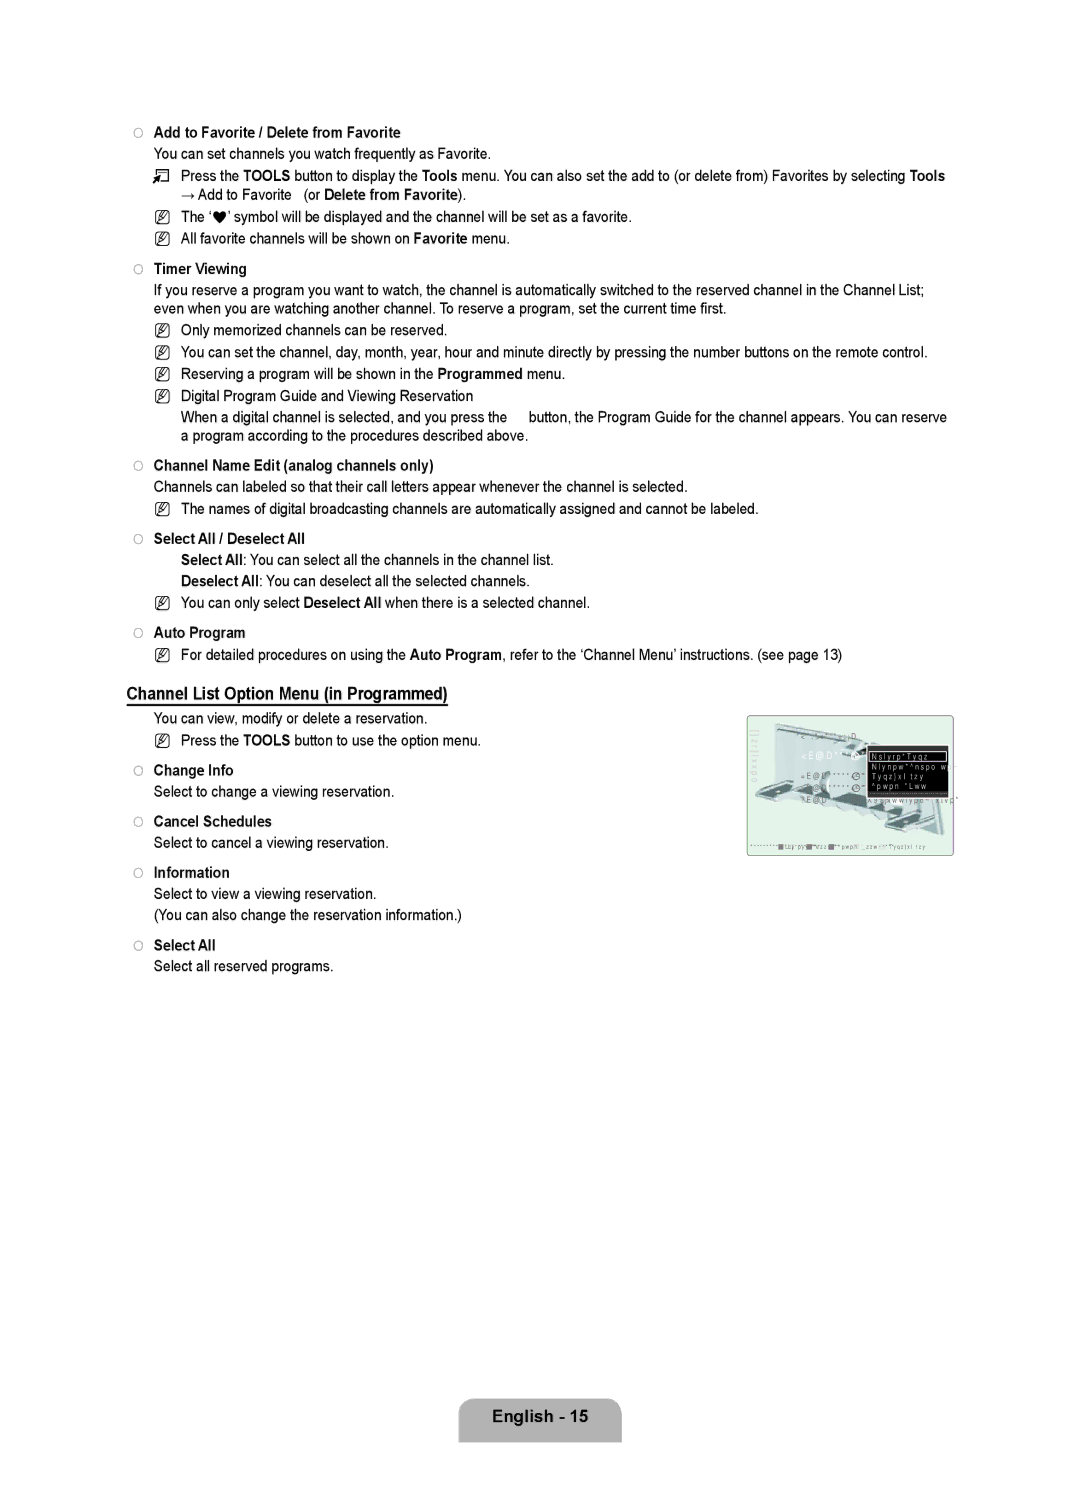 Samsung LN6B60 user manual Channel List Option Menu in Programmed 